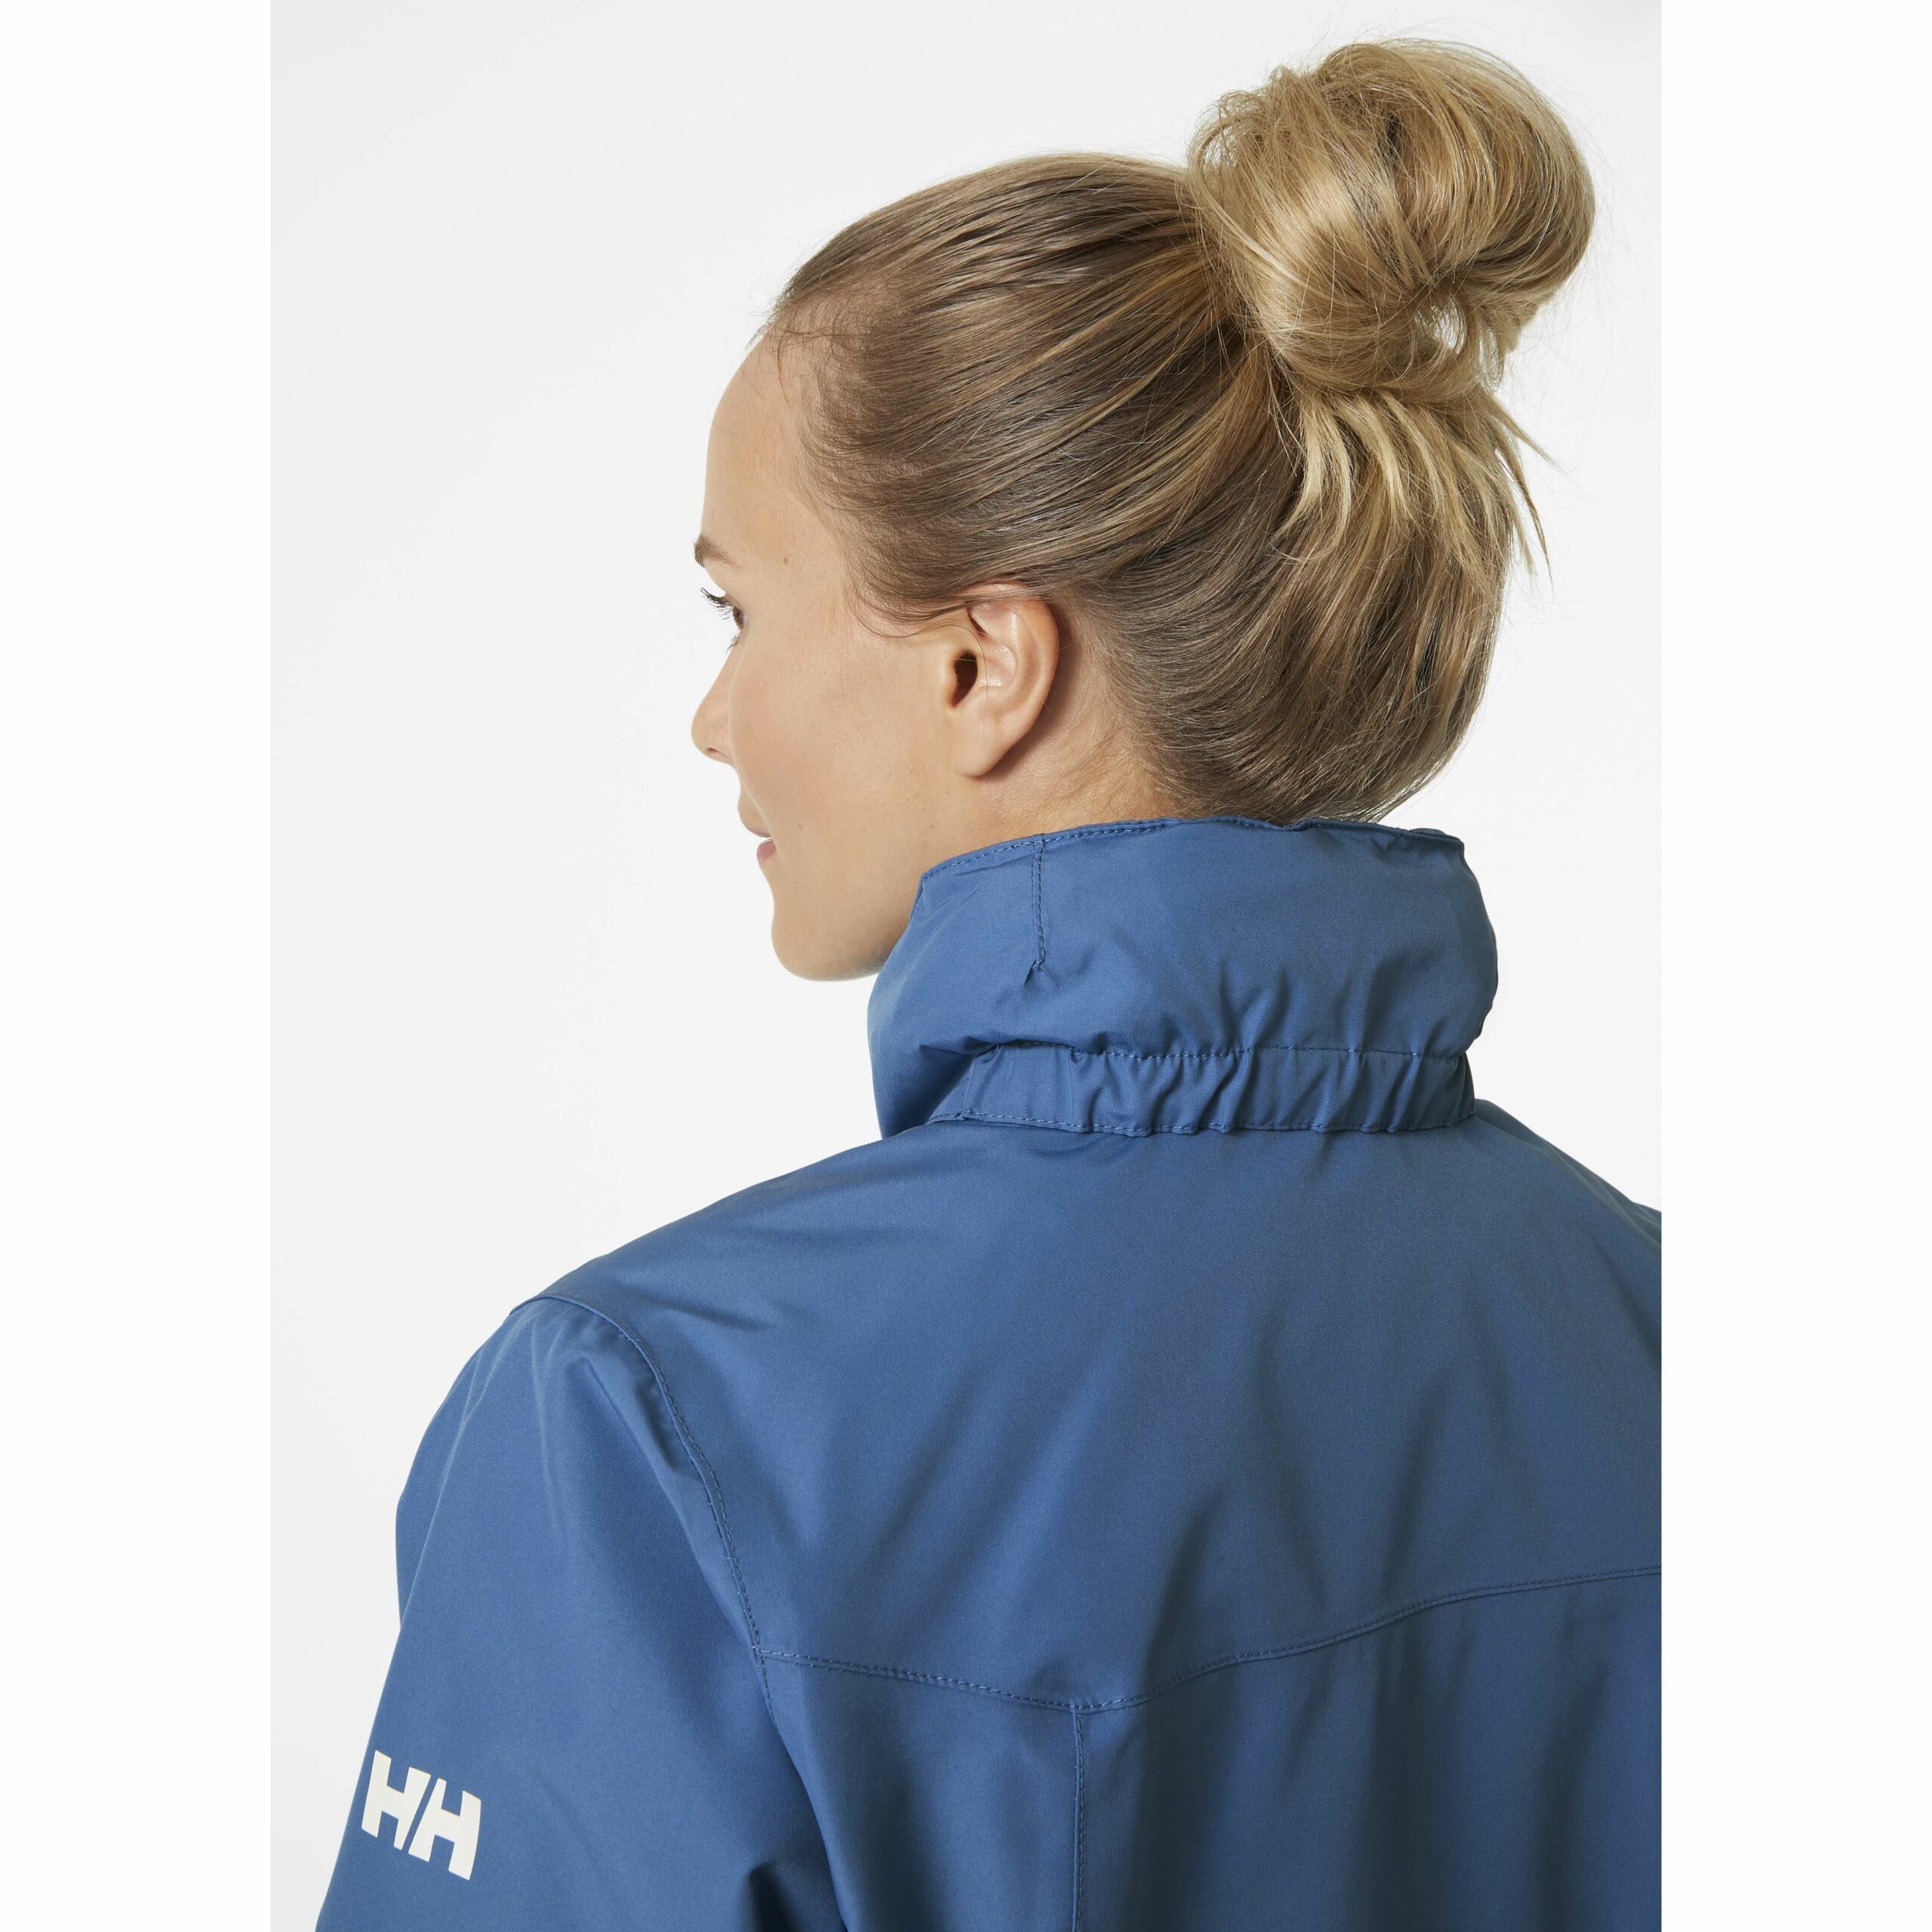 Helly Hansen Womens Aden Long Coat | Big Weather Gear Helly Newport